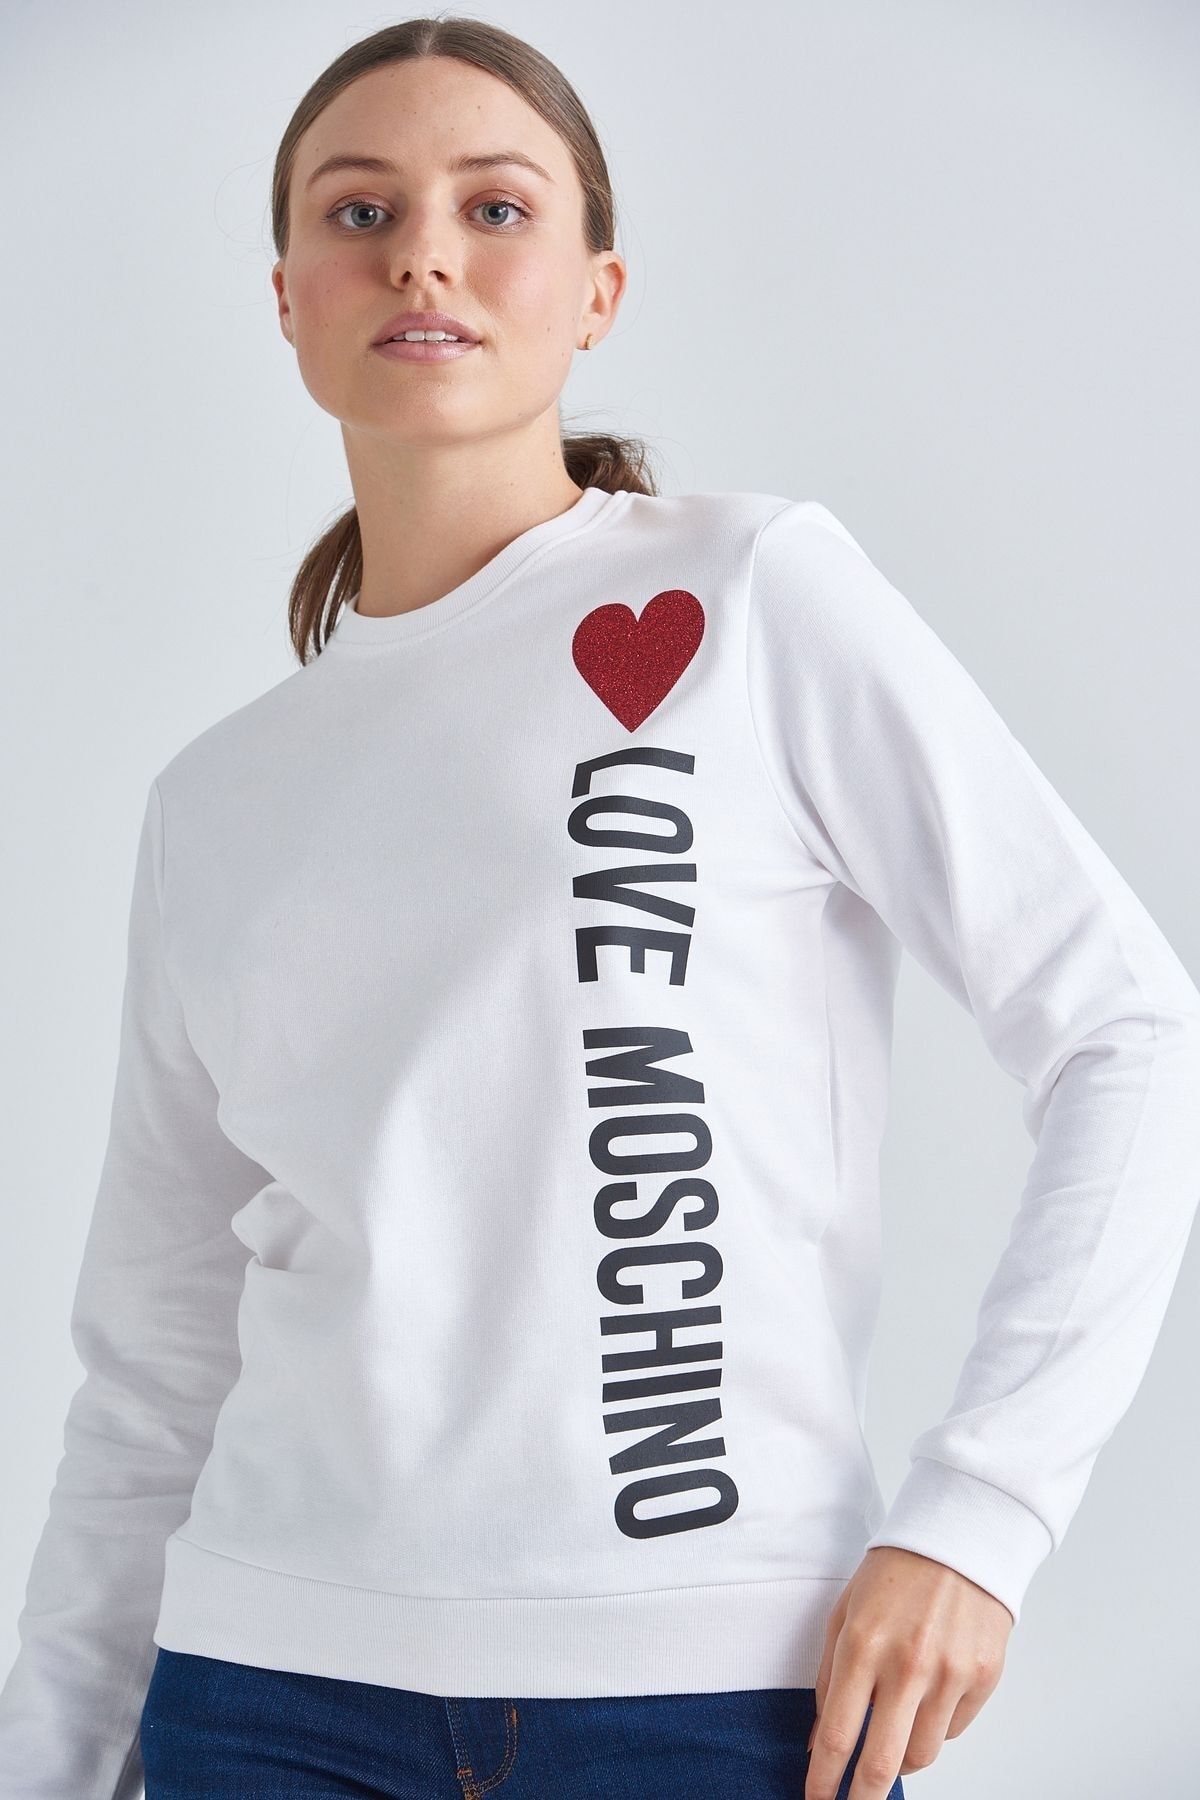 Moschino پیراهن با آرم زنان